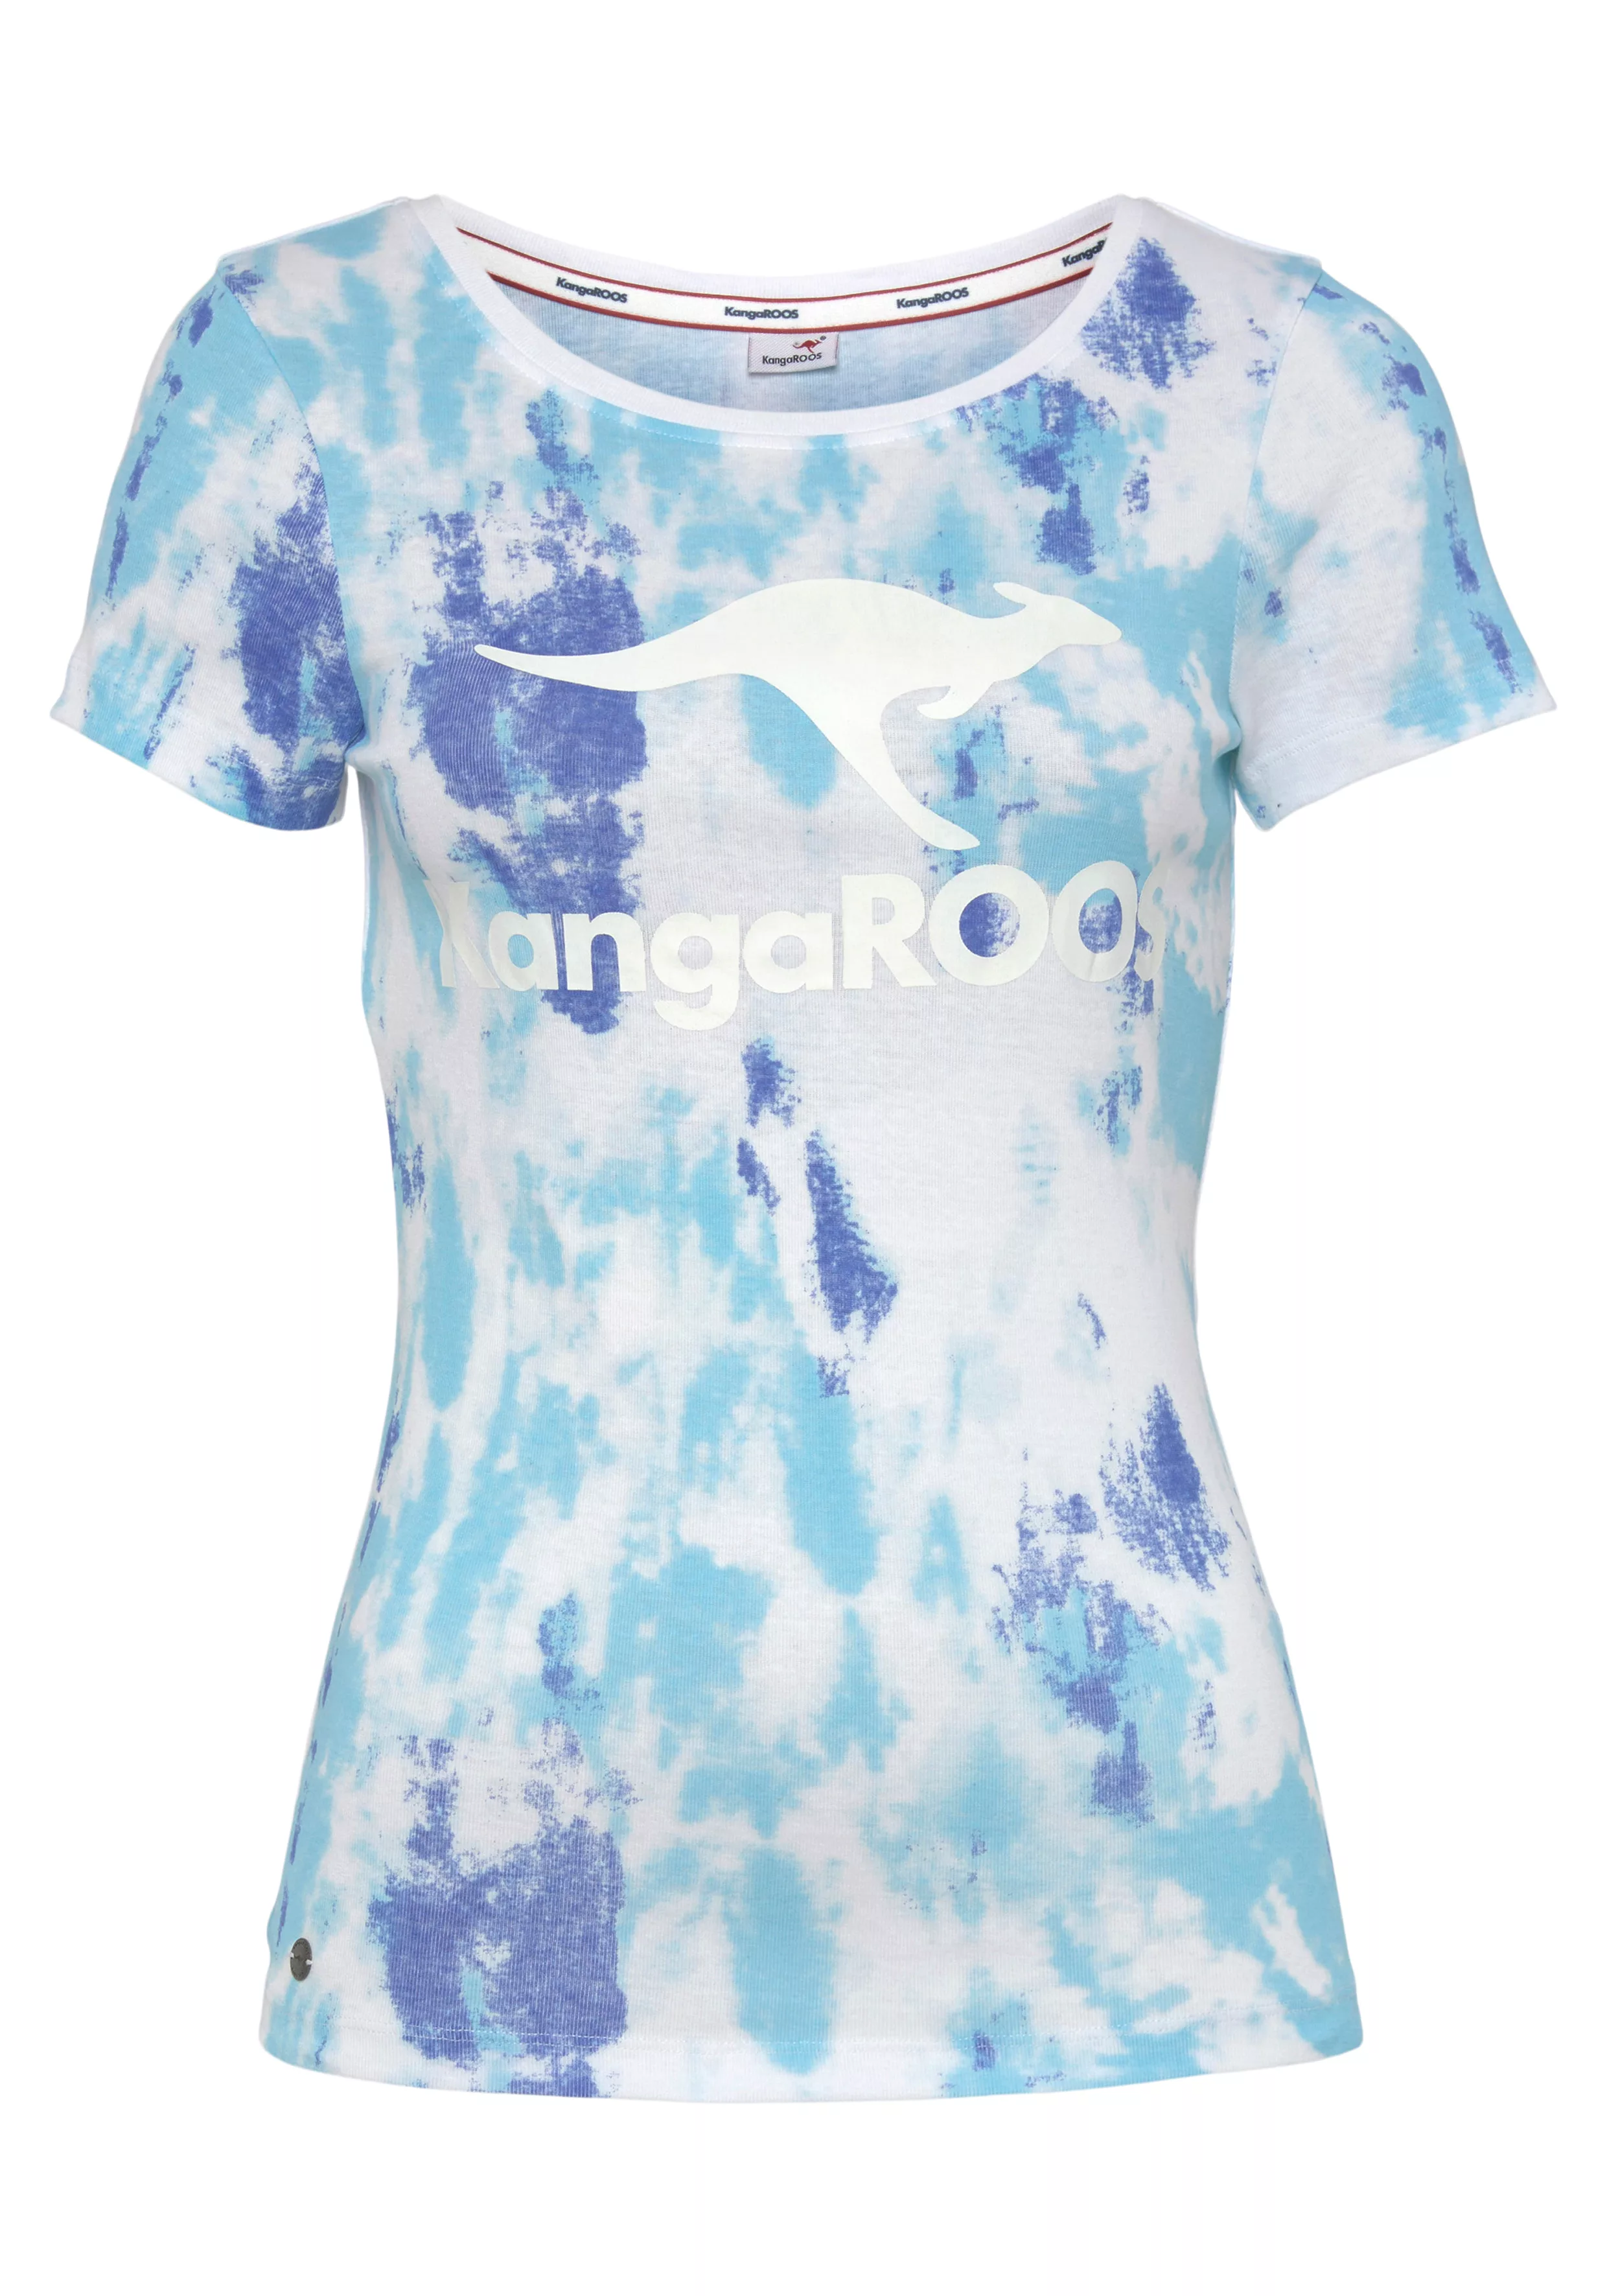 KangaROOS T-Shirt im trendigen Batik-Look - NEUE KOLLEKTION günstig online kaufen